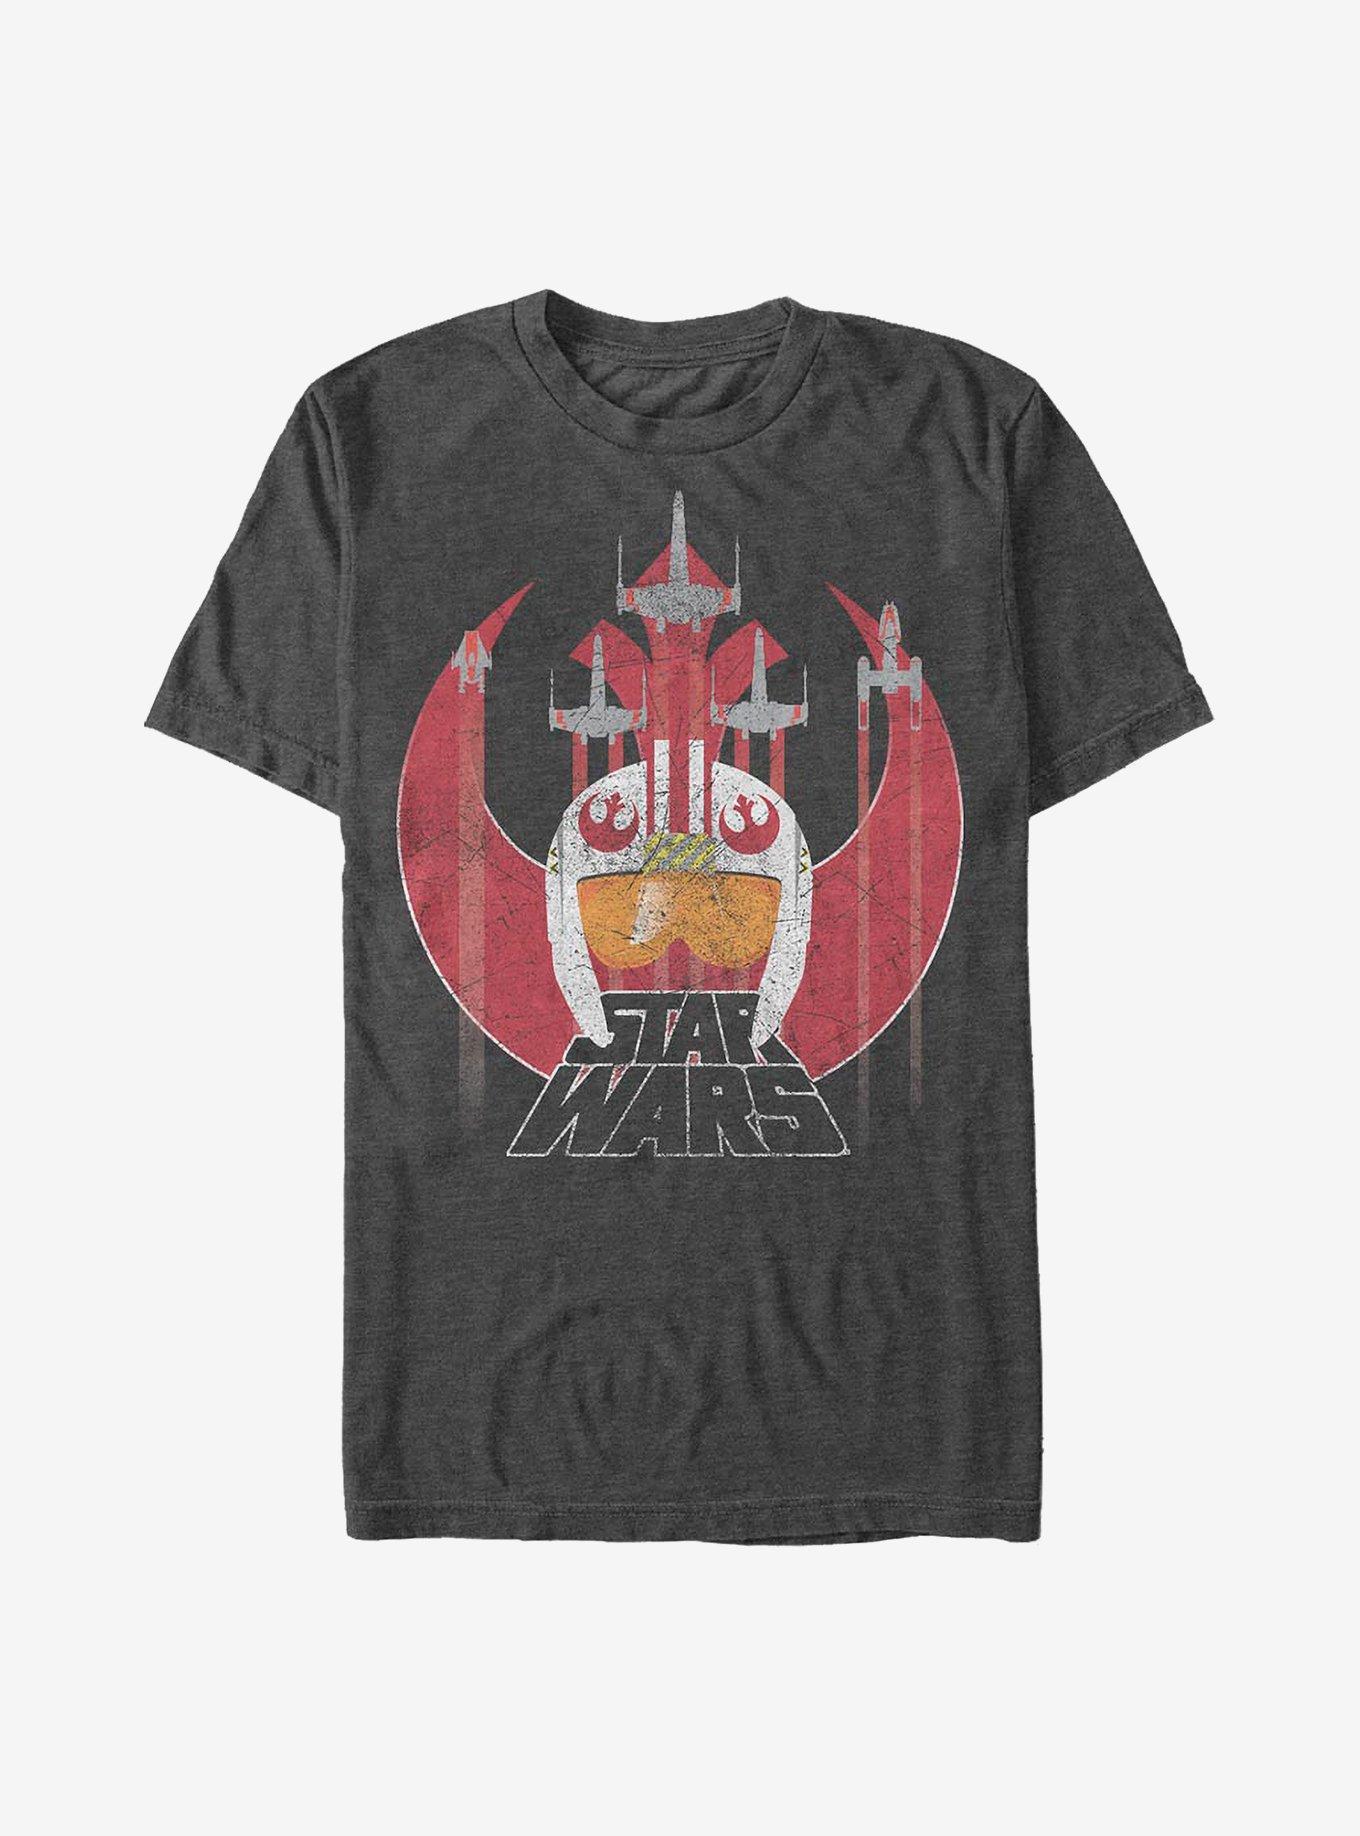 Star Wars Red Five T-Shirt